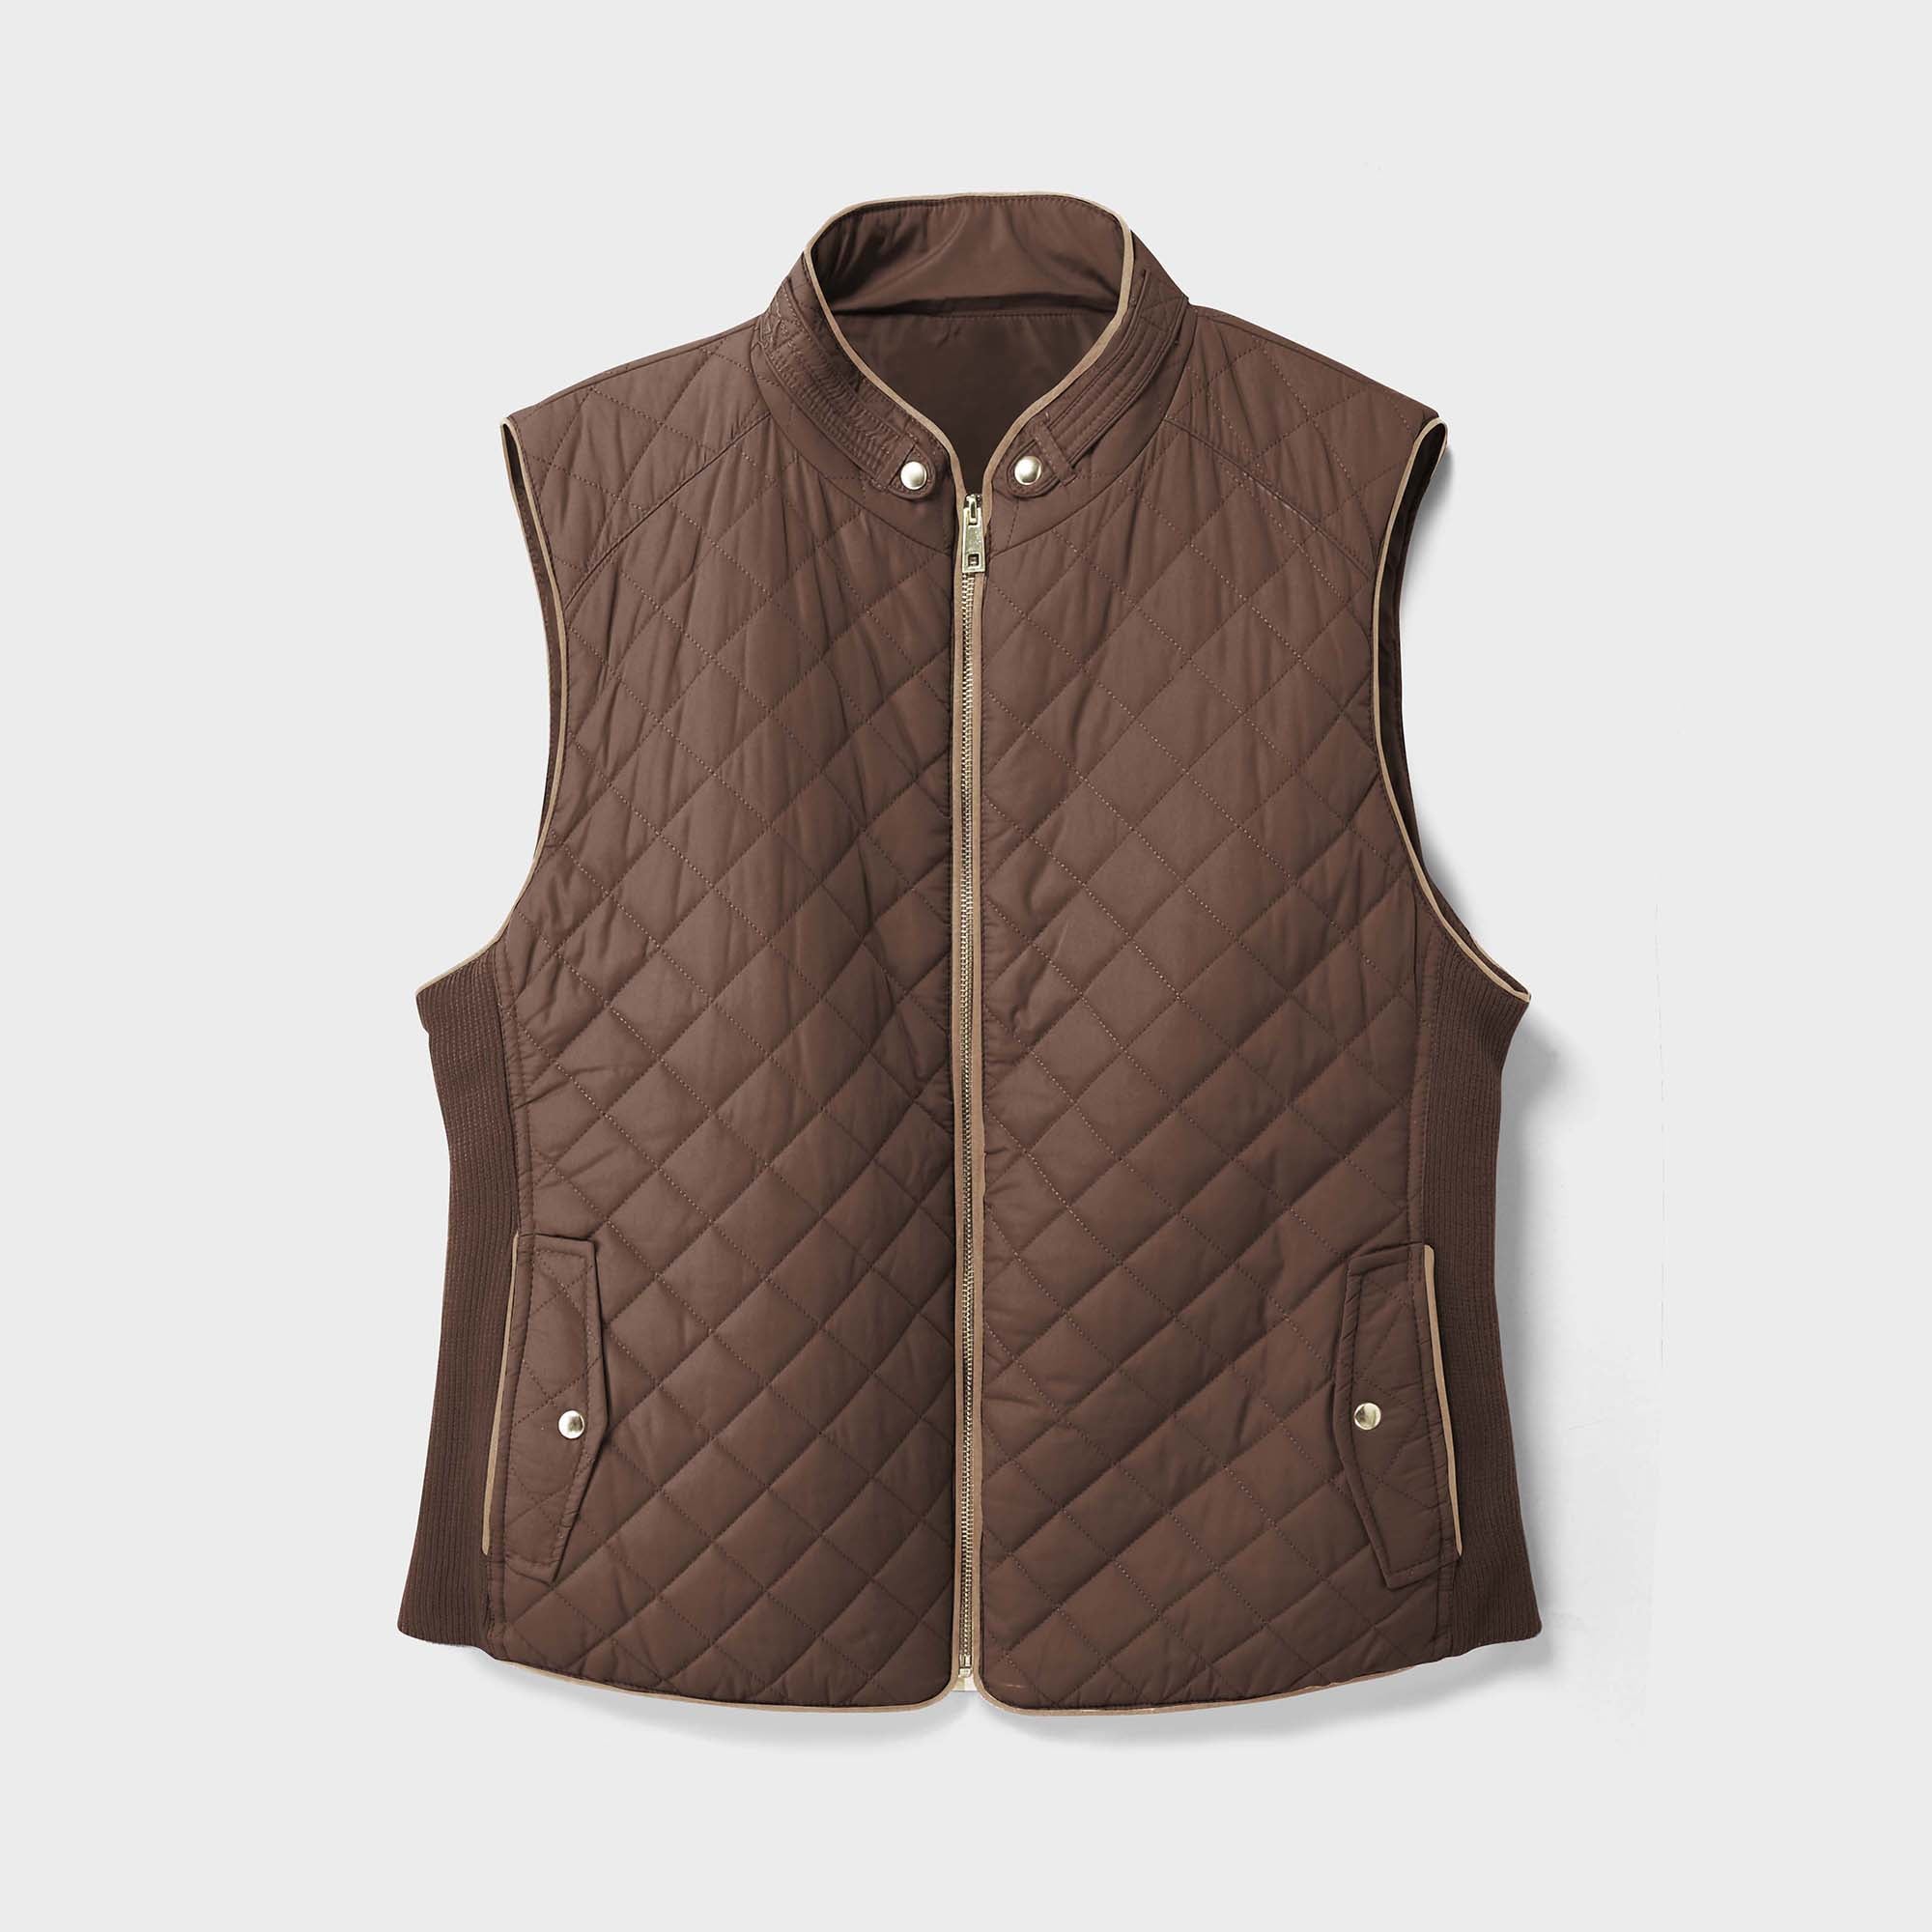 women vest_women puffer vest_sweater vest women_sweat vest for women_ladies vests_women's dressy vests_women fashion vest_Brown